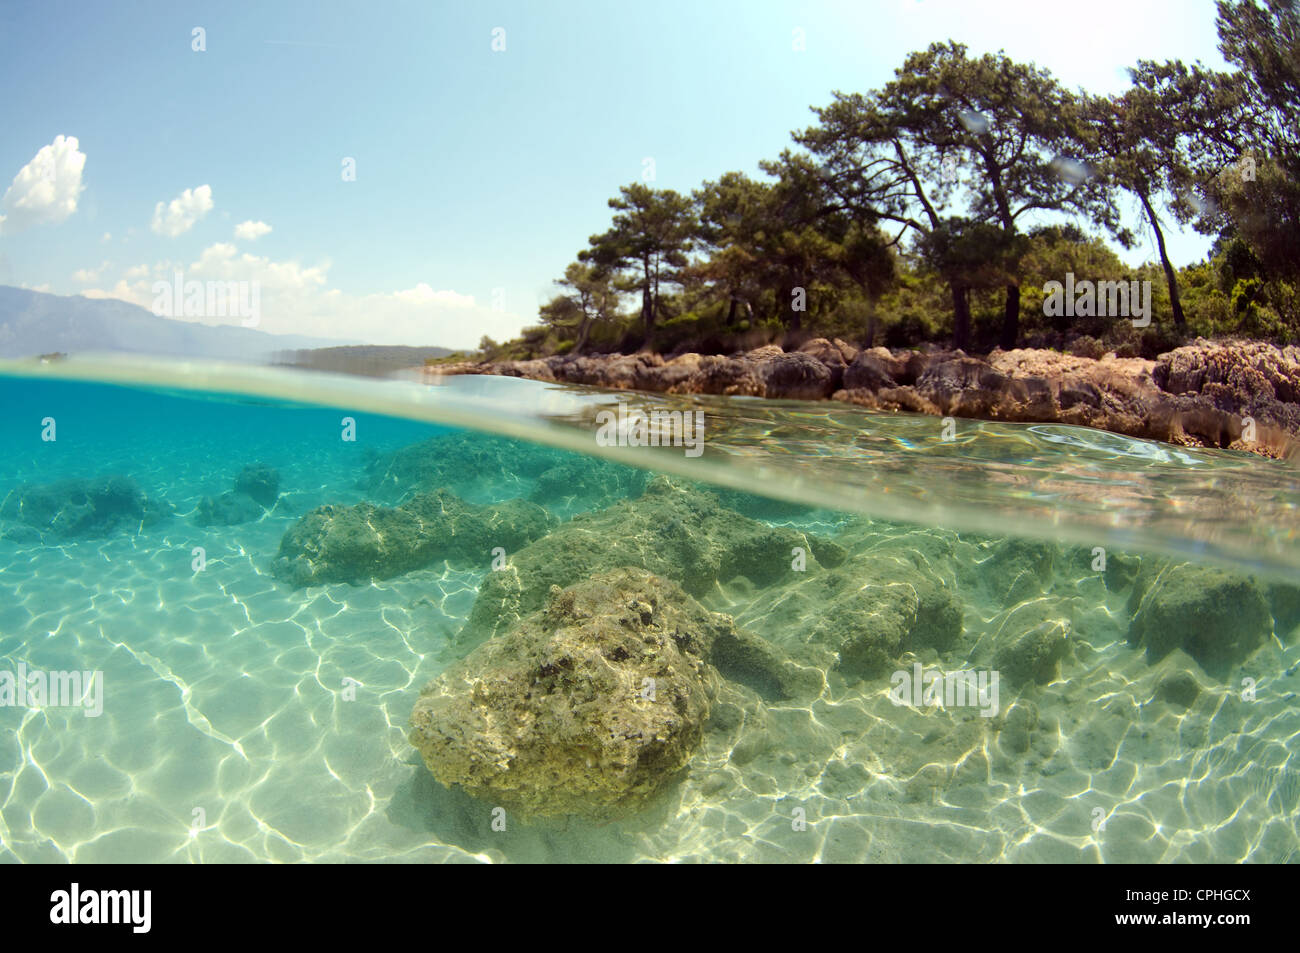 Split level, underwater landscape, Cleopatra island (Sedir Island), Aegean Sea, Turkey Stock Photo